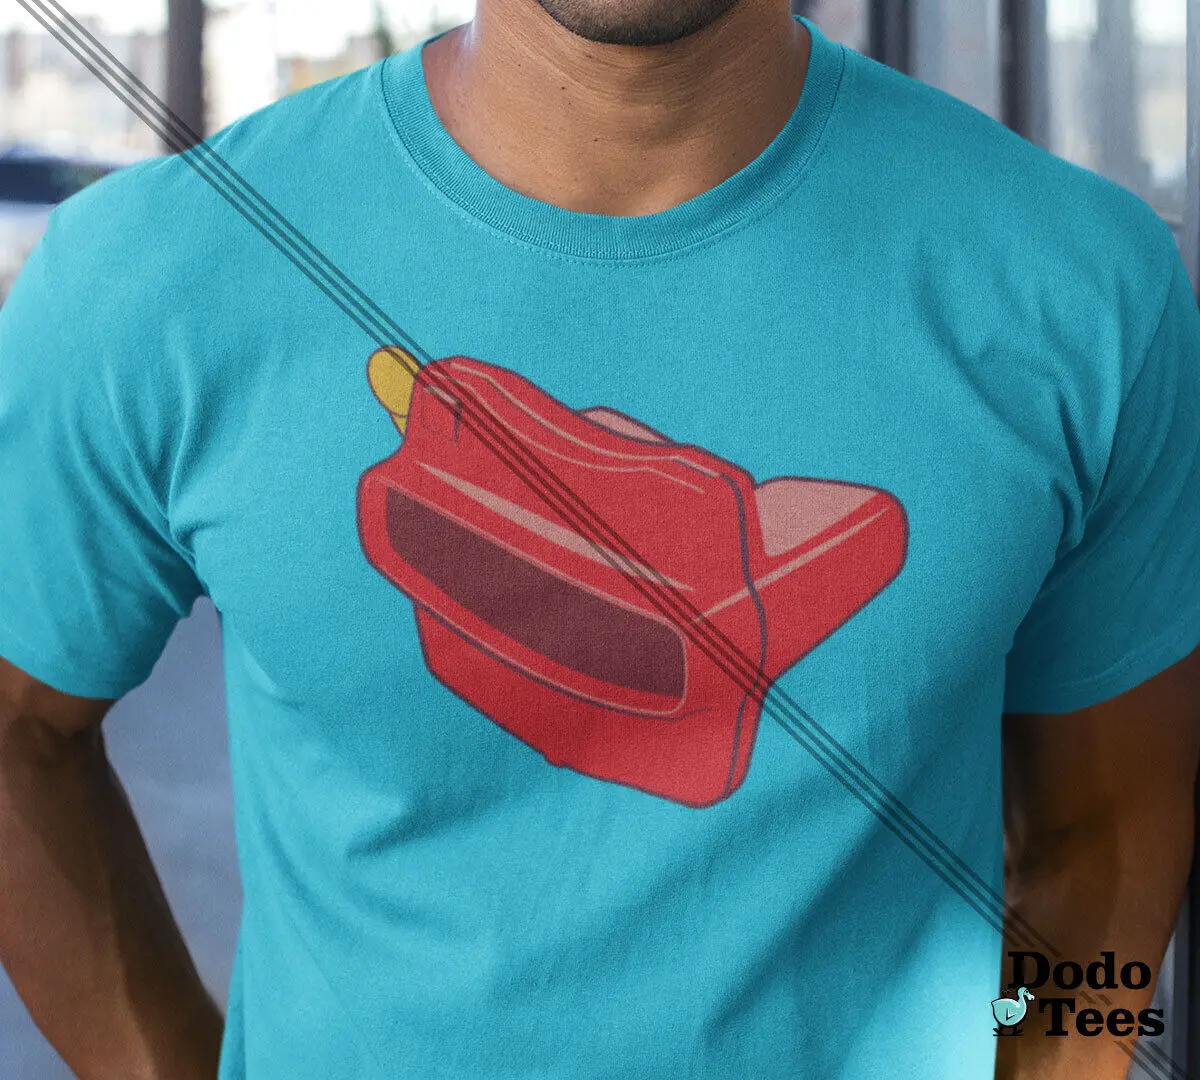 Мужская футболка Viewmaster в стиле ретро 80-х, новинка, забавный юмор, саркастические графические футболки